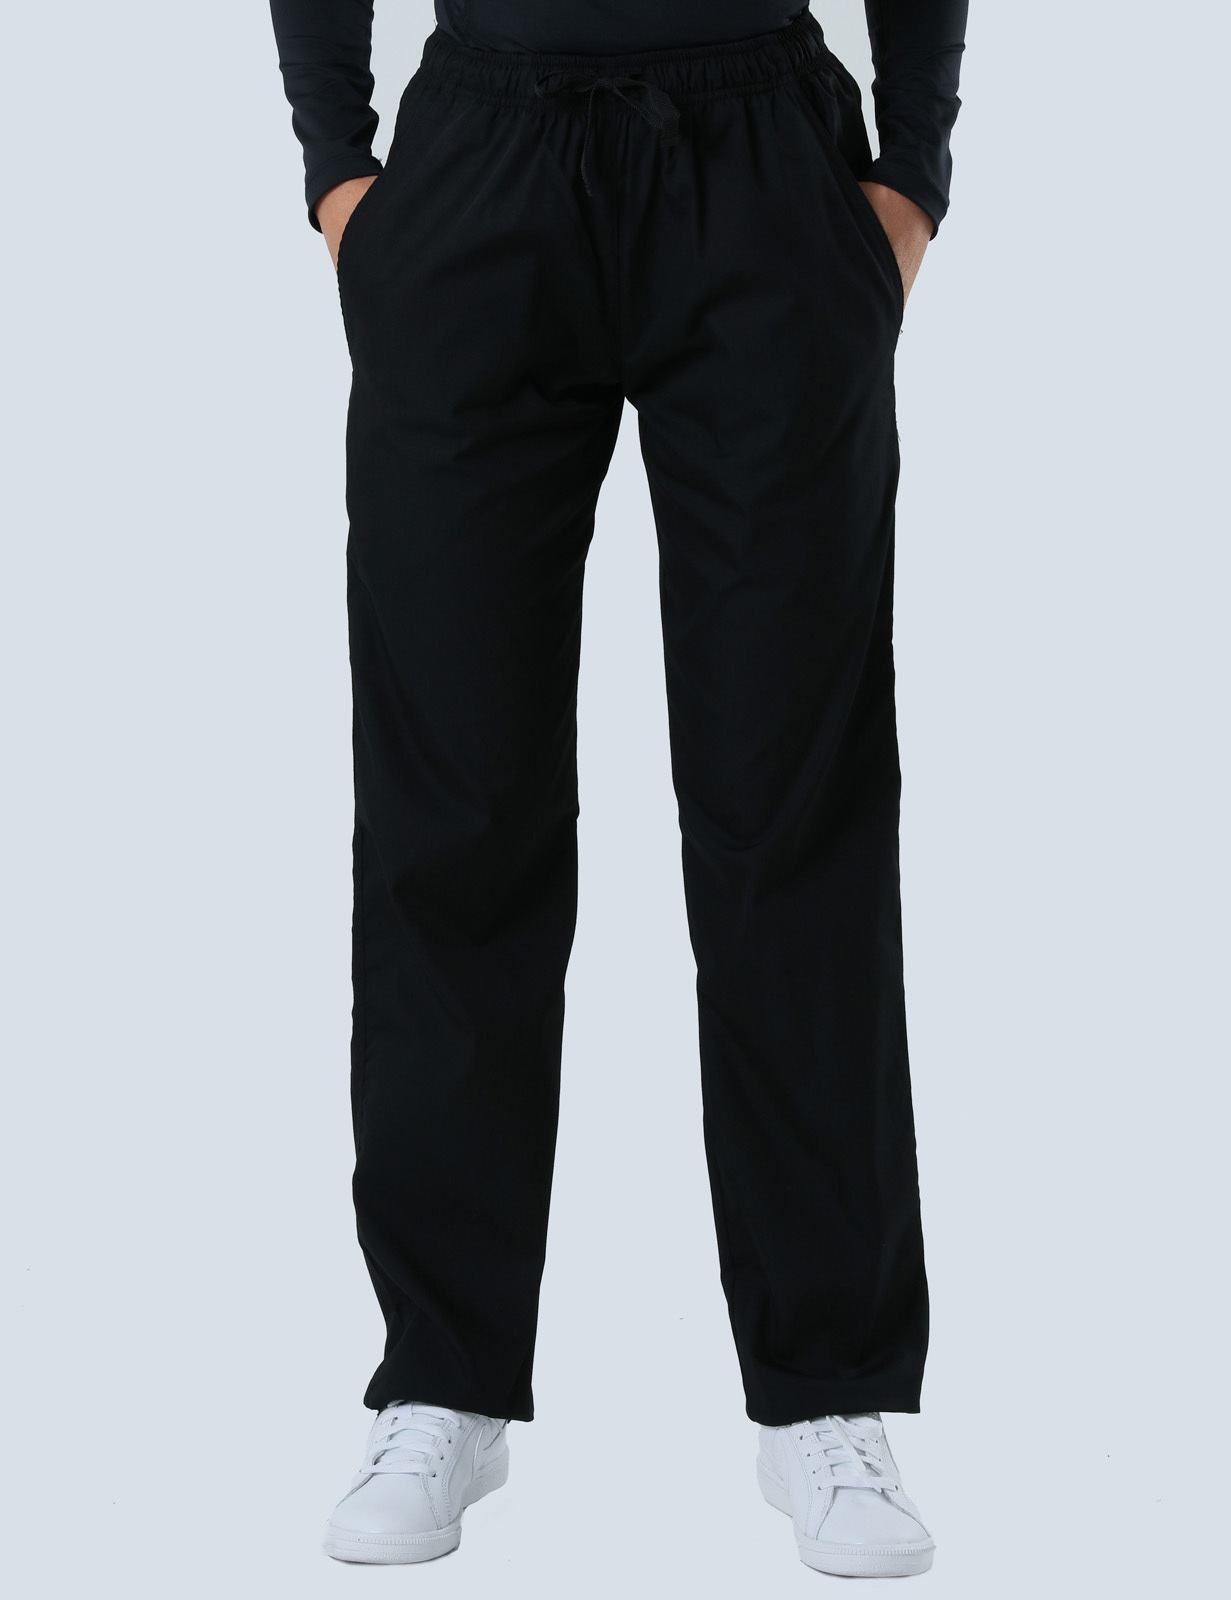 Women's Regular Cut Pants - Black - 4X large